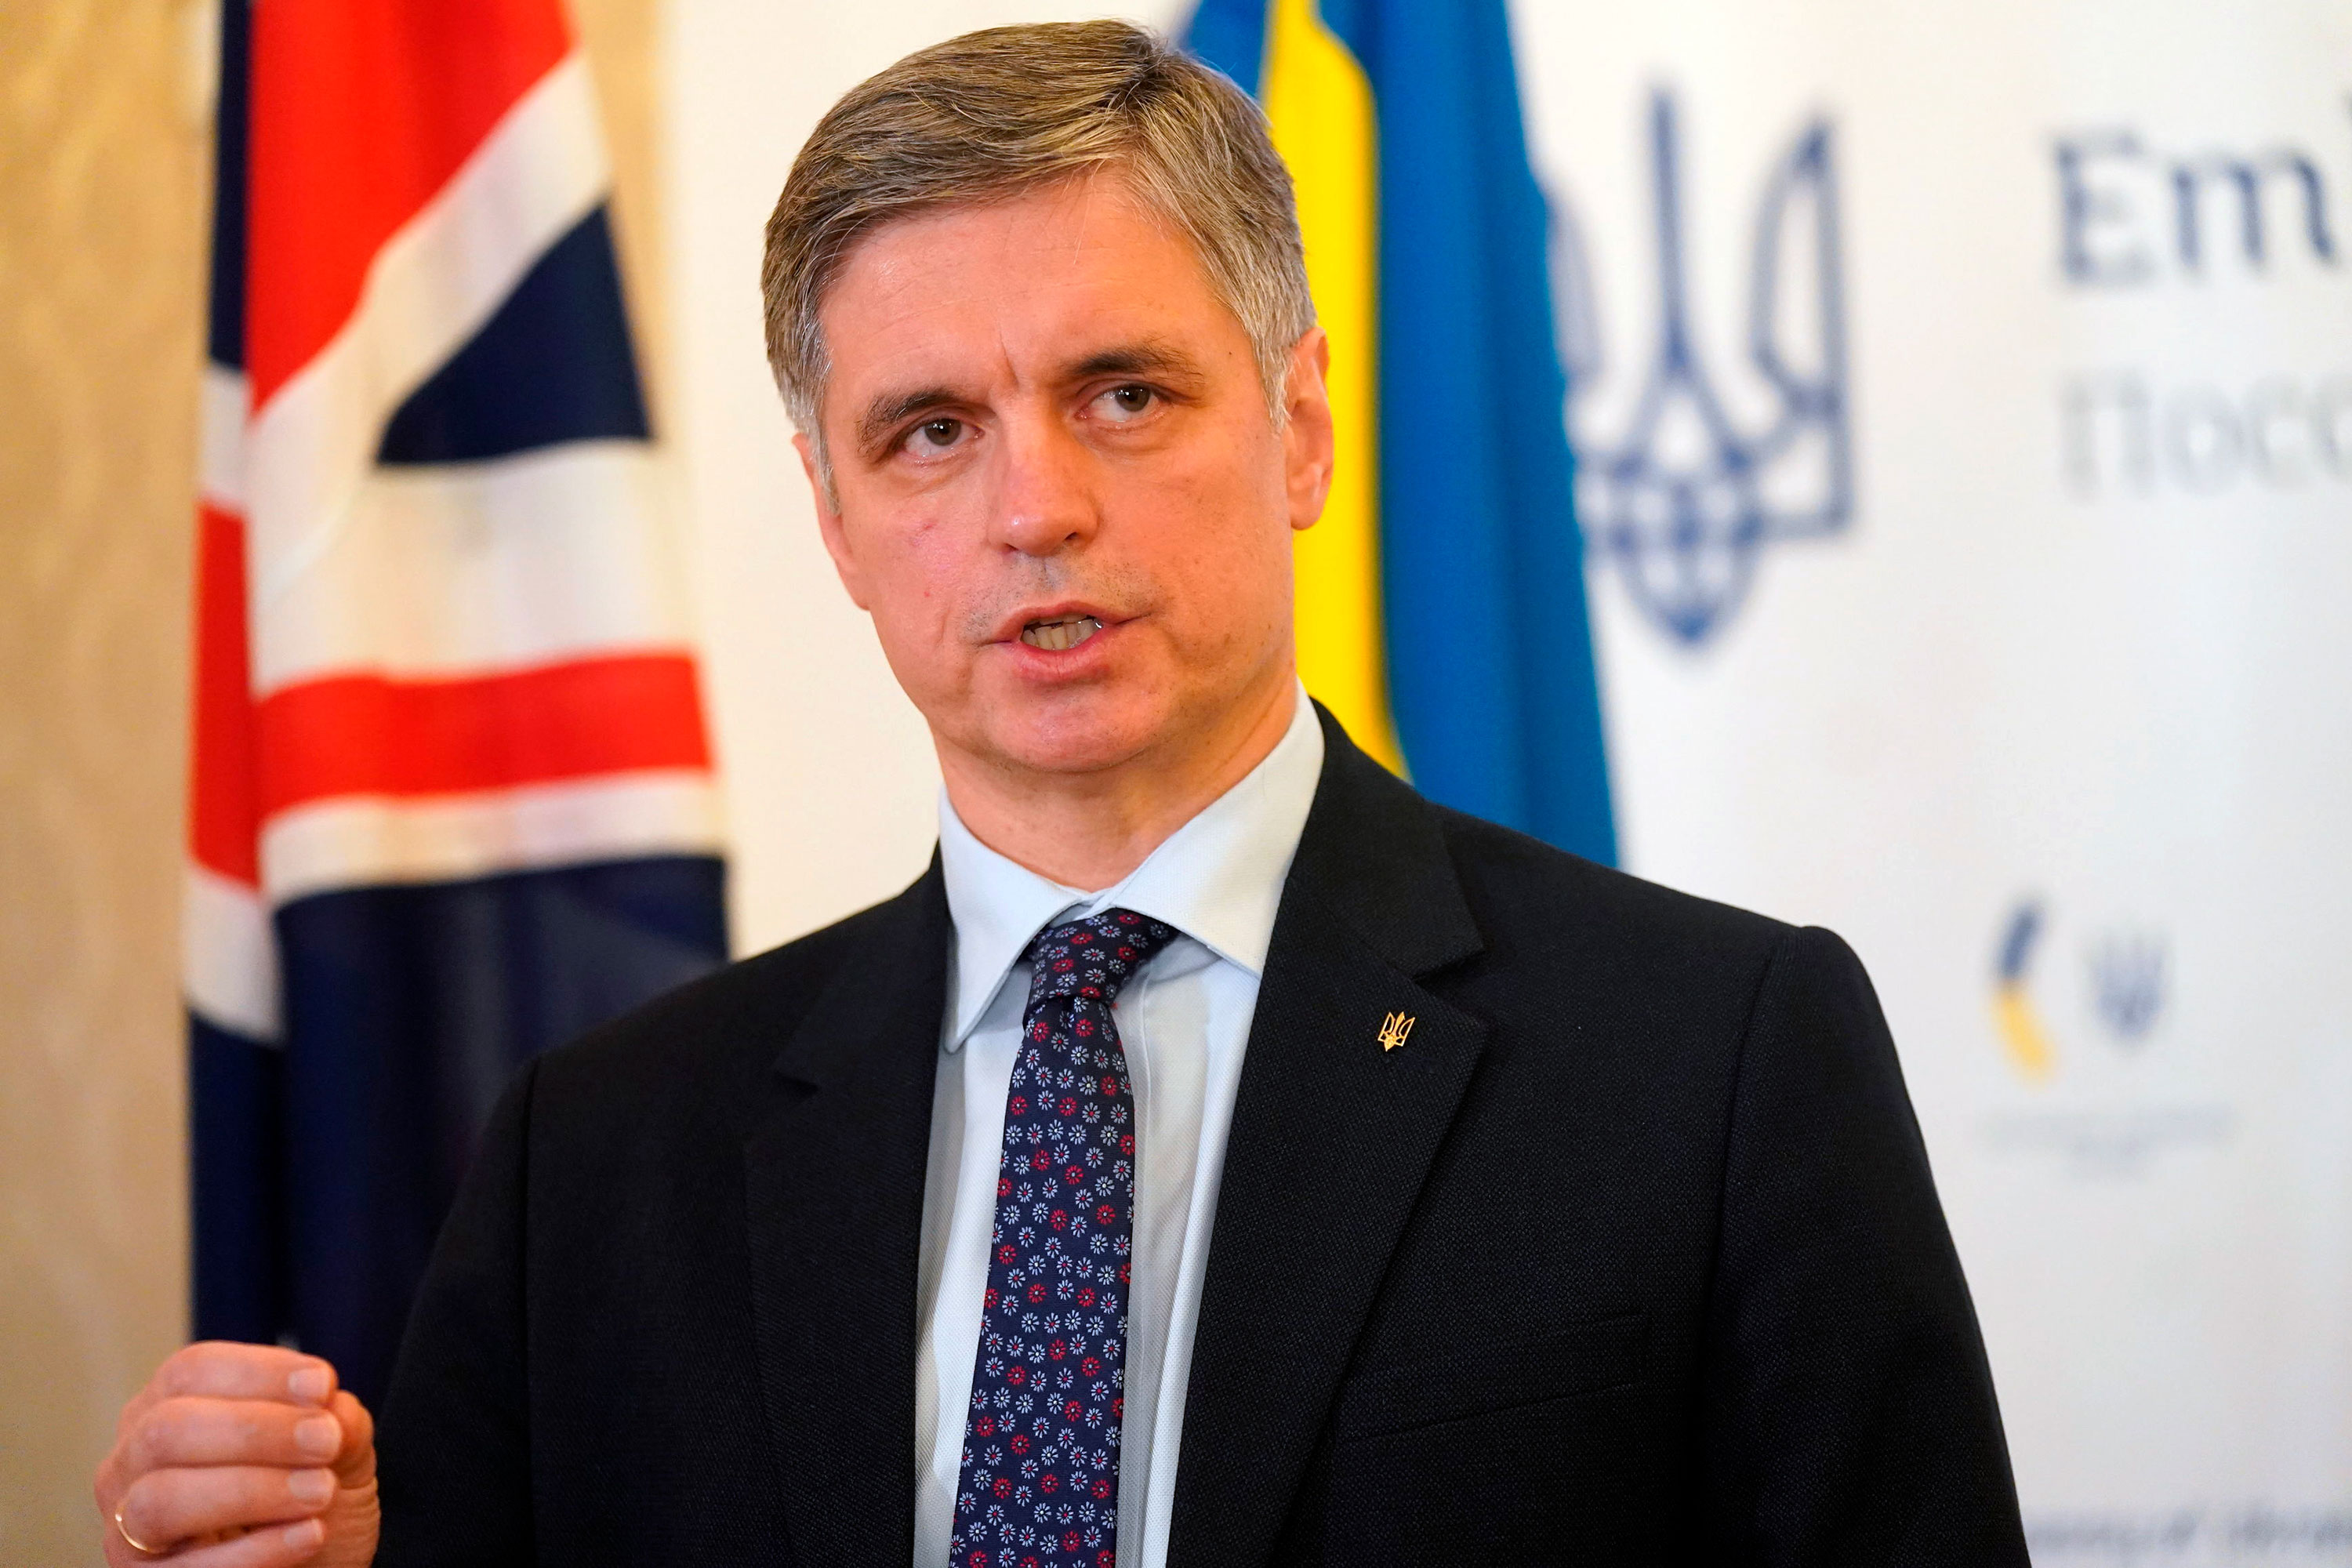 Ukrainian Ambassador to the UK Vadym Prystaiko speaks to the media at the Ukrainian Embassy in London on February 24.